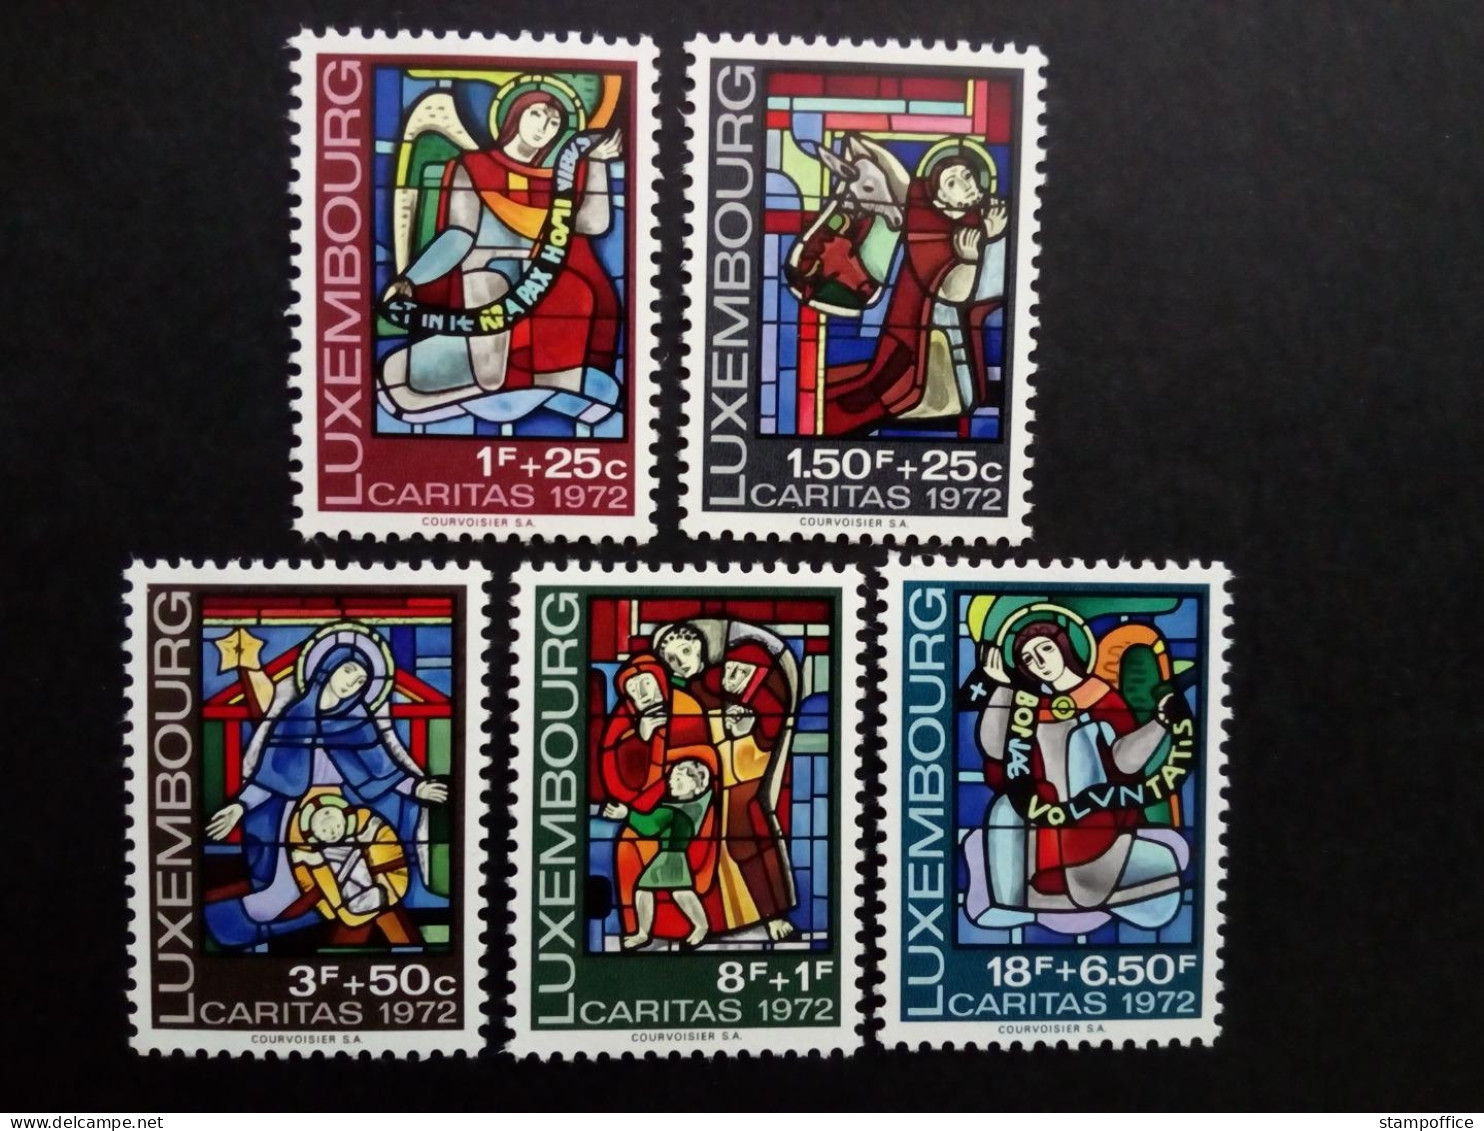 LUXEMBOURG MI-NR. 853-857 POSTFRISCH(MINT) CARITAS 1972 GLASMALEREI - Unused Stamps